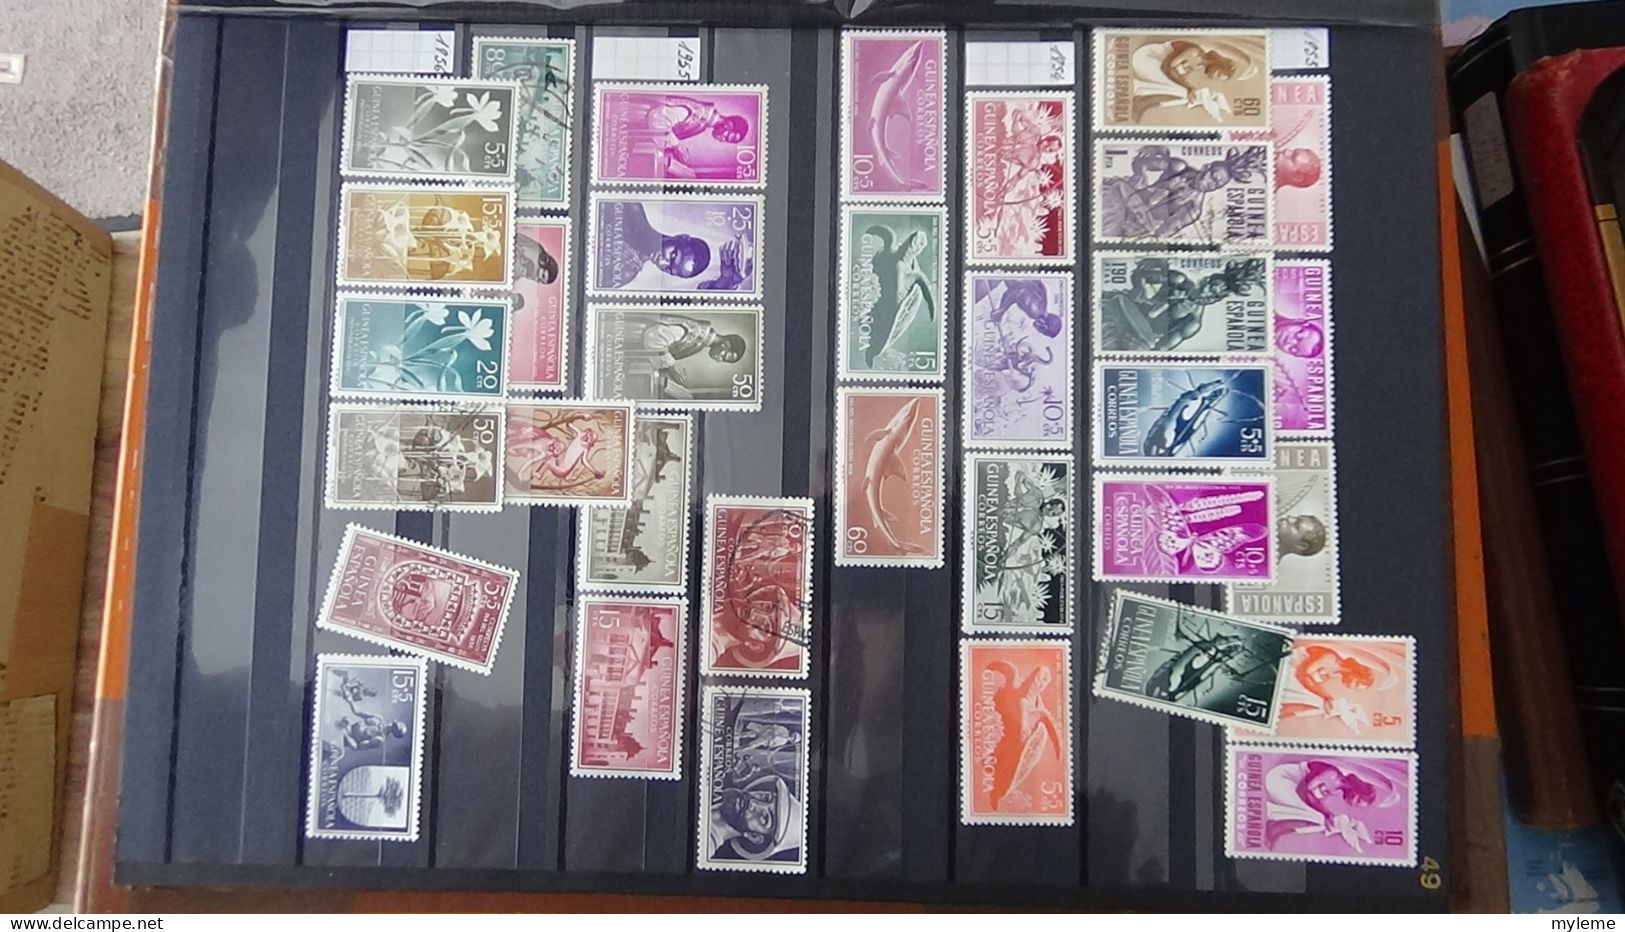 BF33 Ensemble de timbres de divers pays + Orphelin N° 153 ** signé  Cote 1050 euros